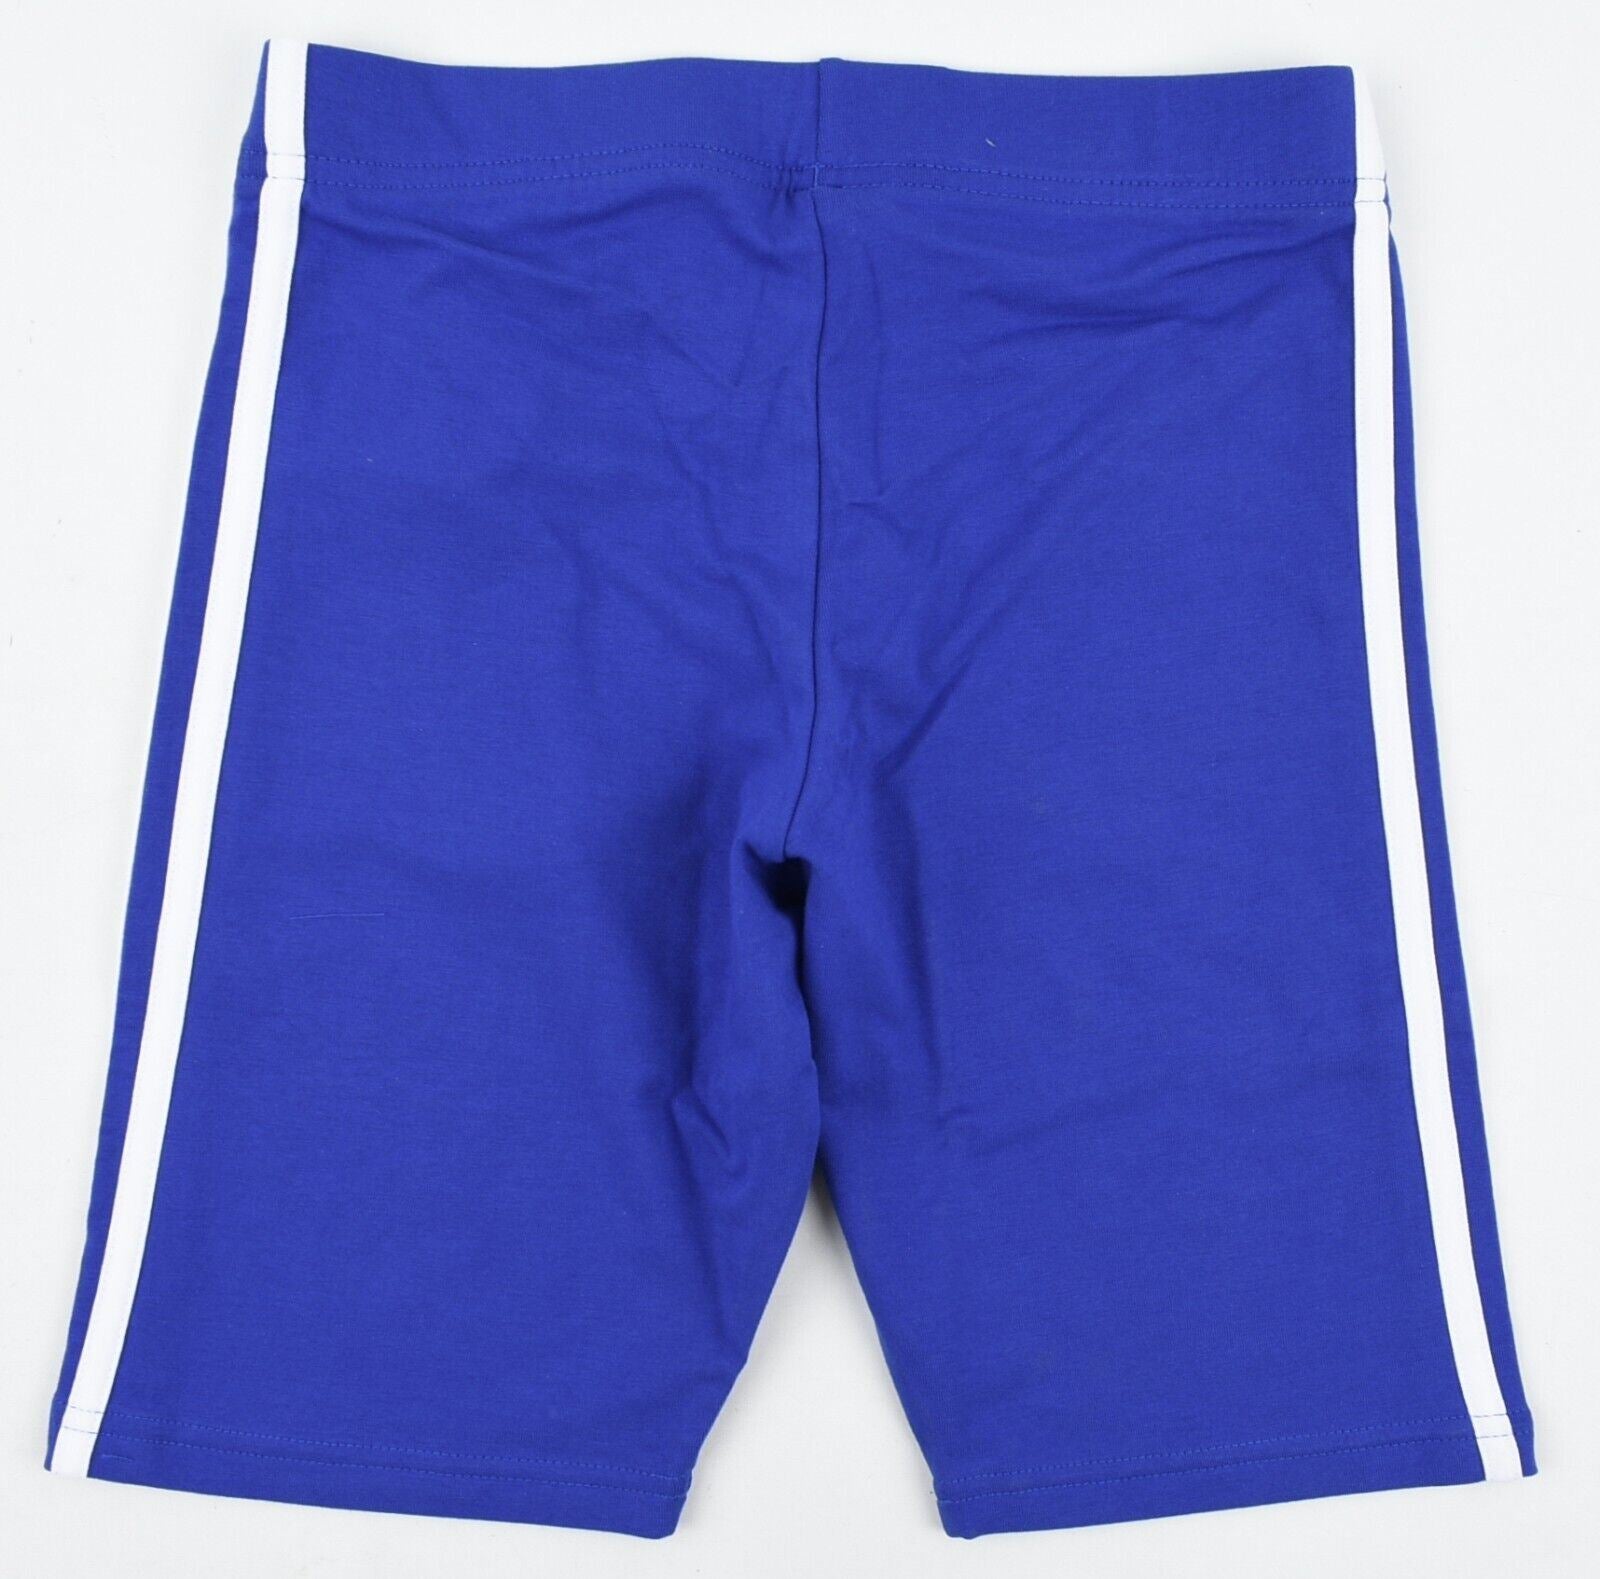 ADIDAS Womens 3 Stripes Essential Cycling Shorts, Leggings, Bold Blue, size M